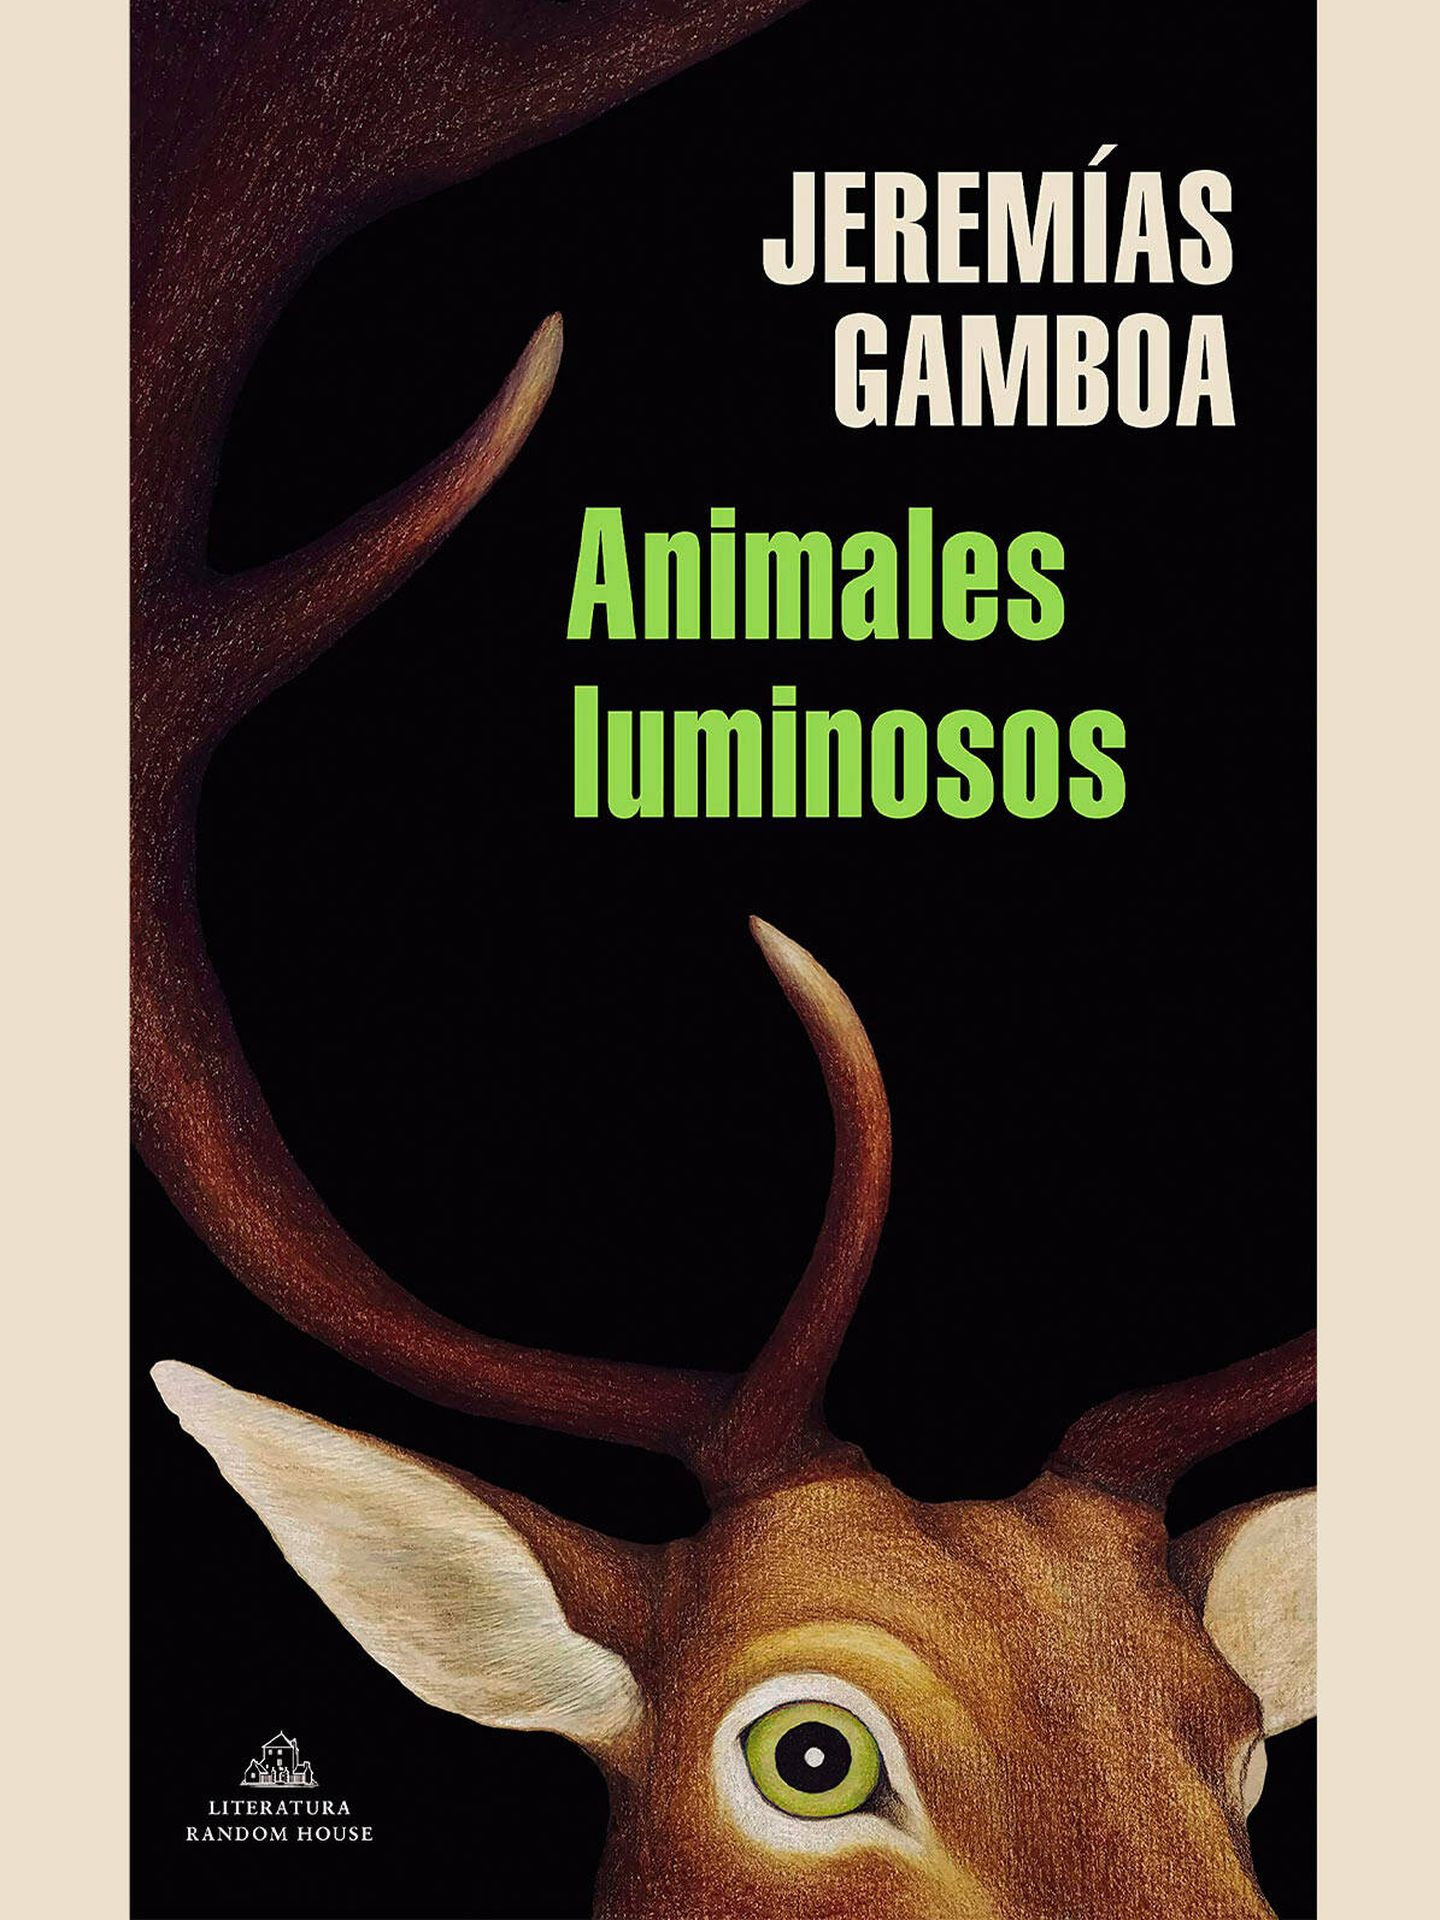 Portada de 'Animales luminosos', de Jeremías Gamboa. 